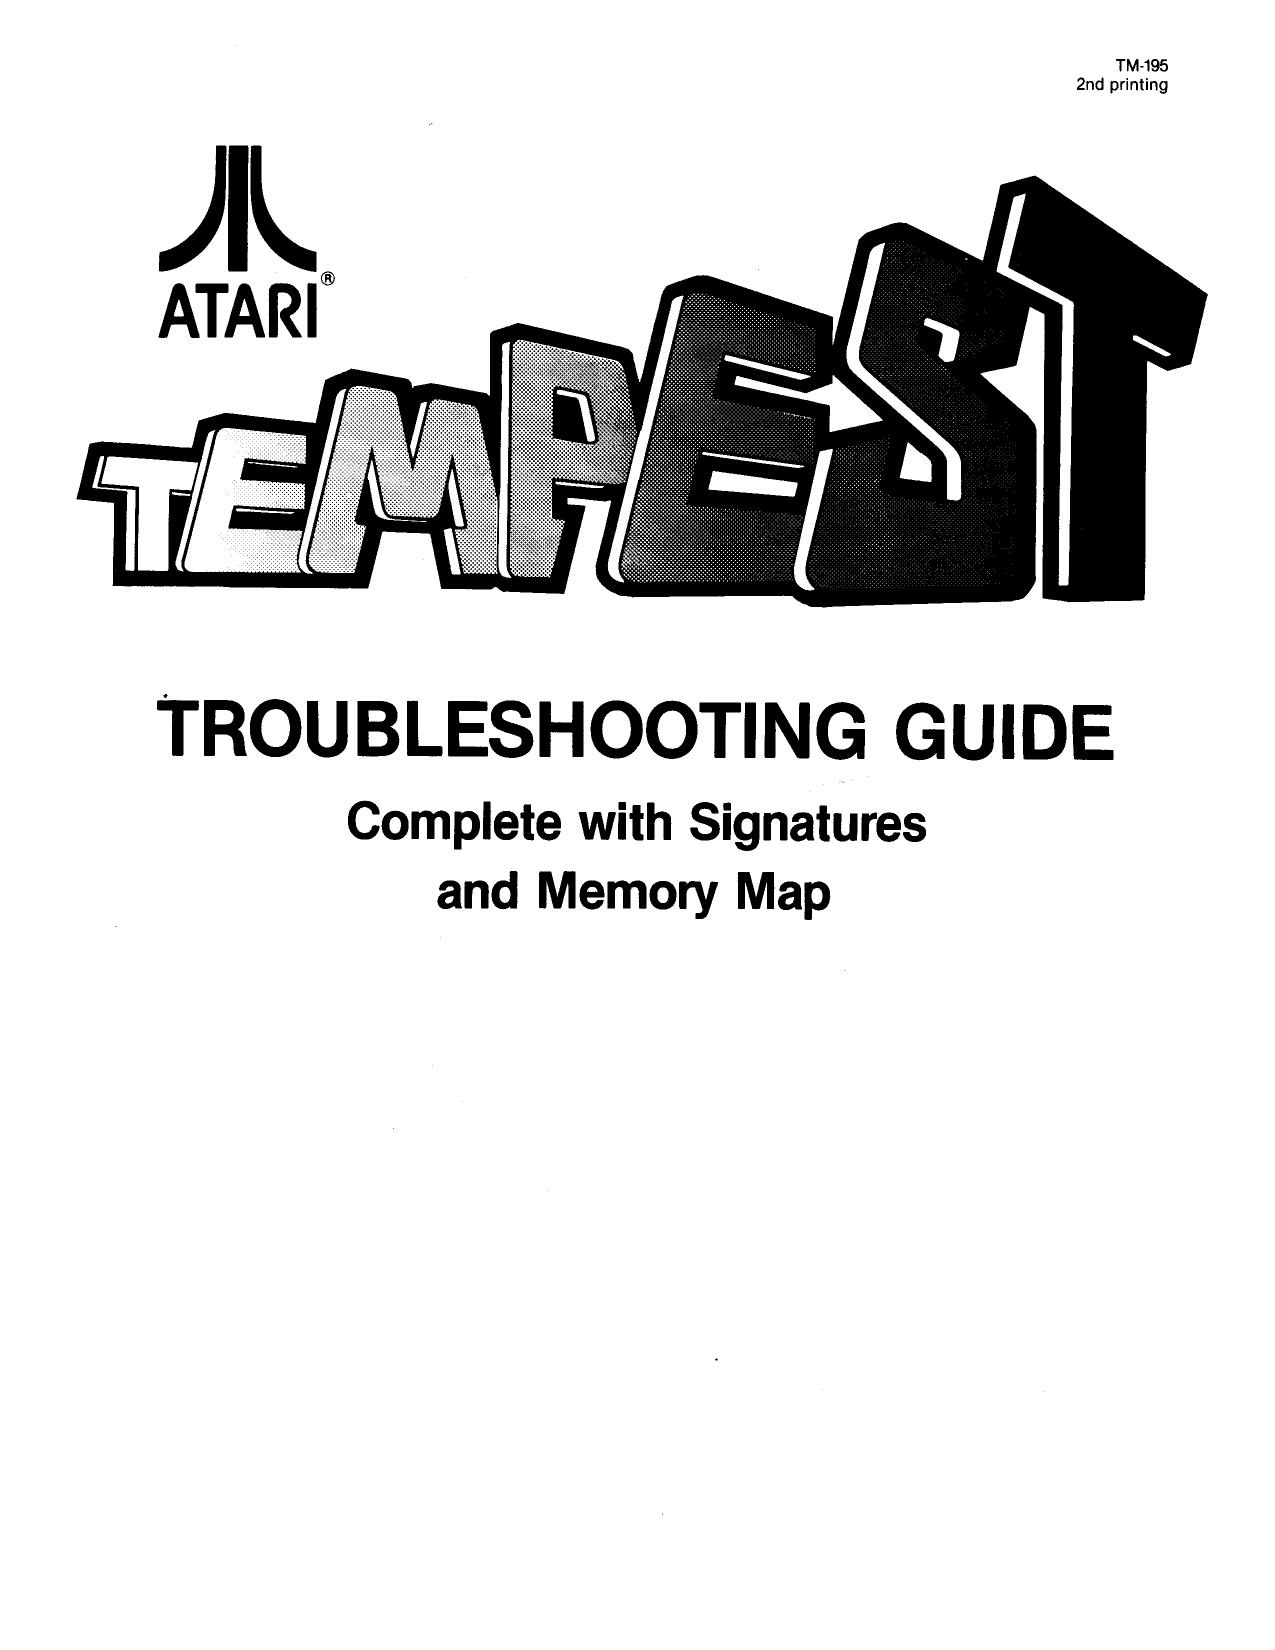 Tempest TM-195 2nd Printing